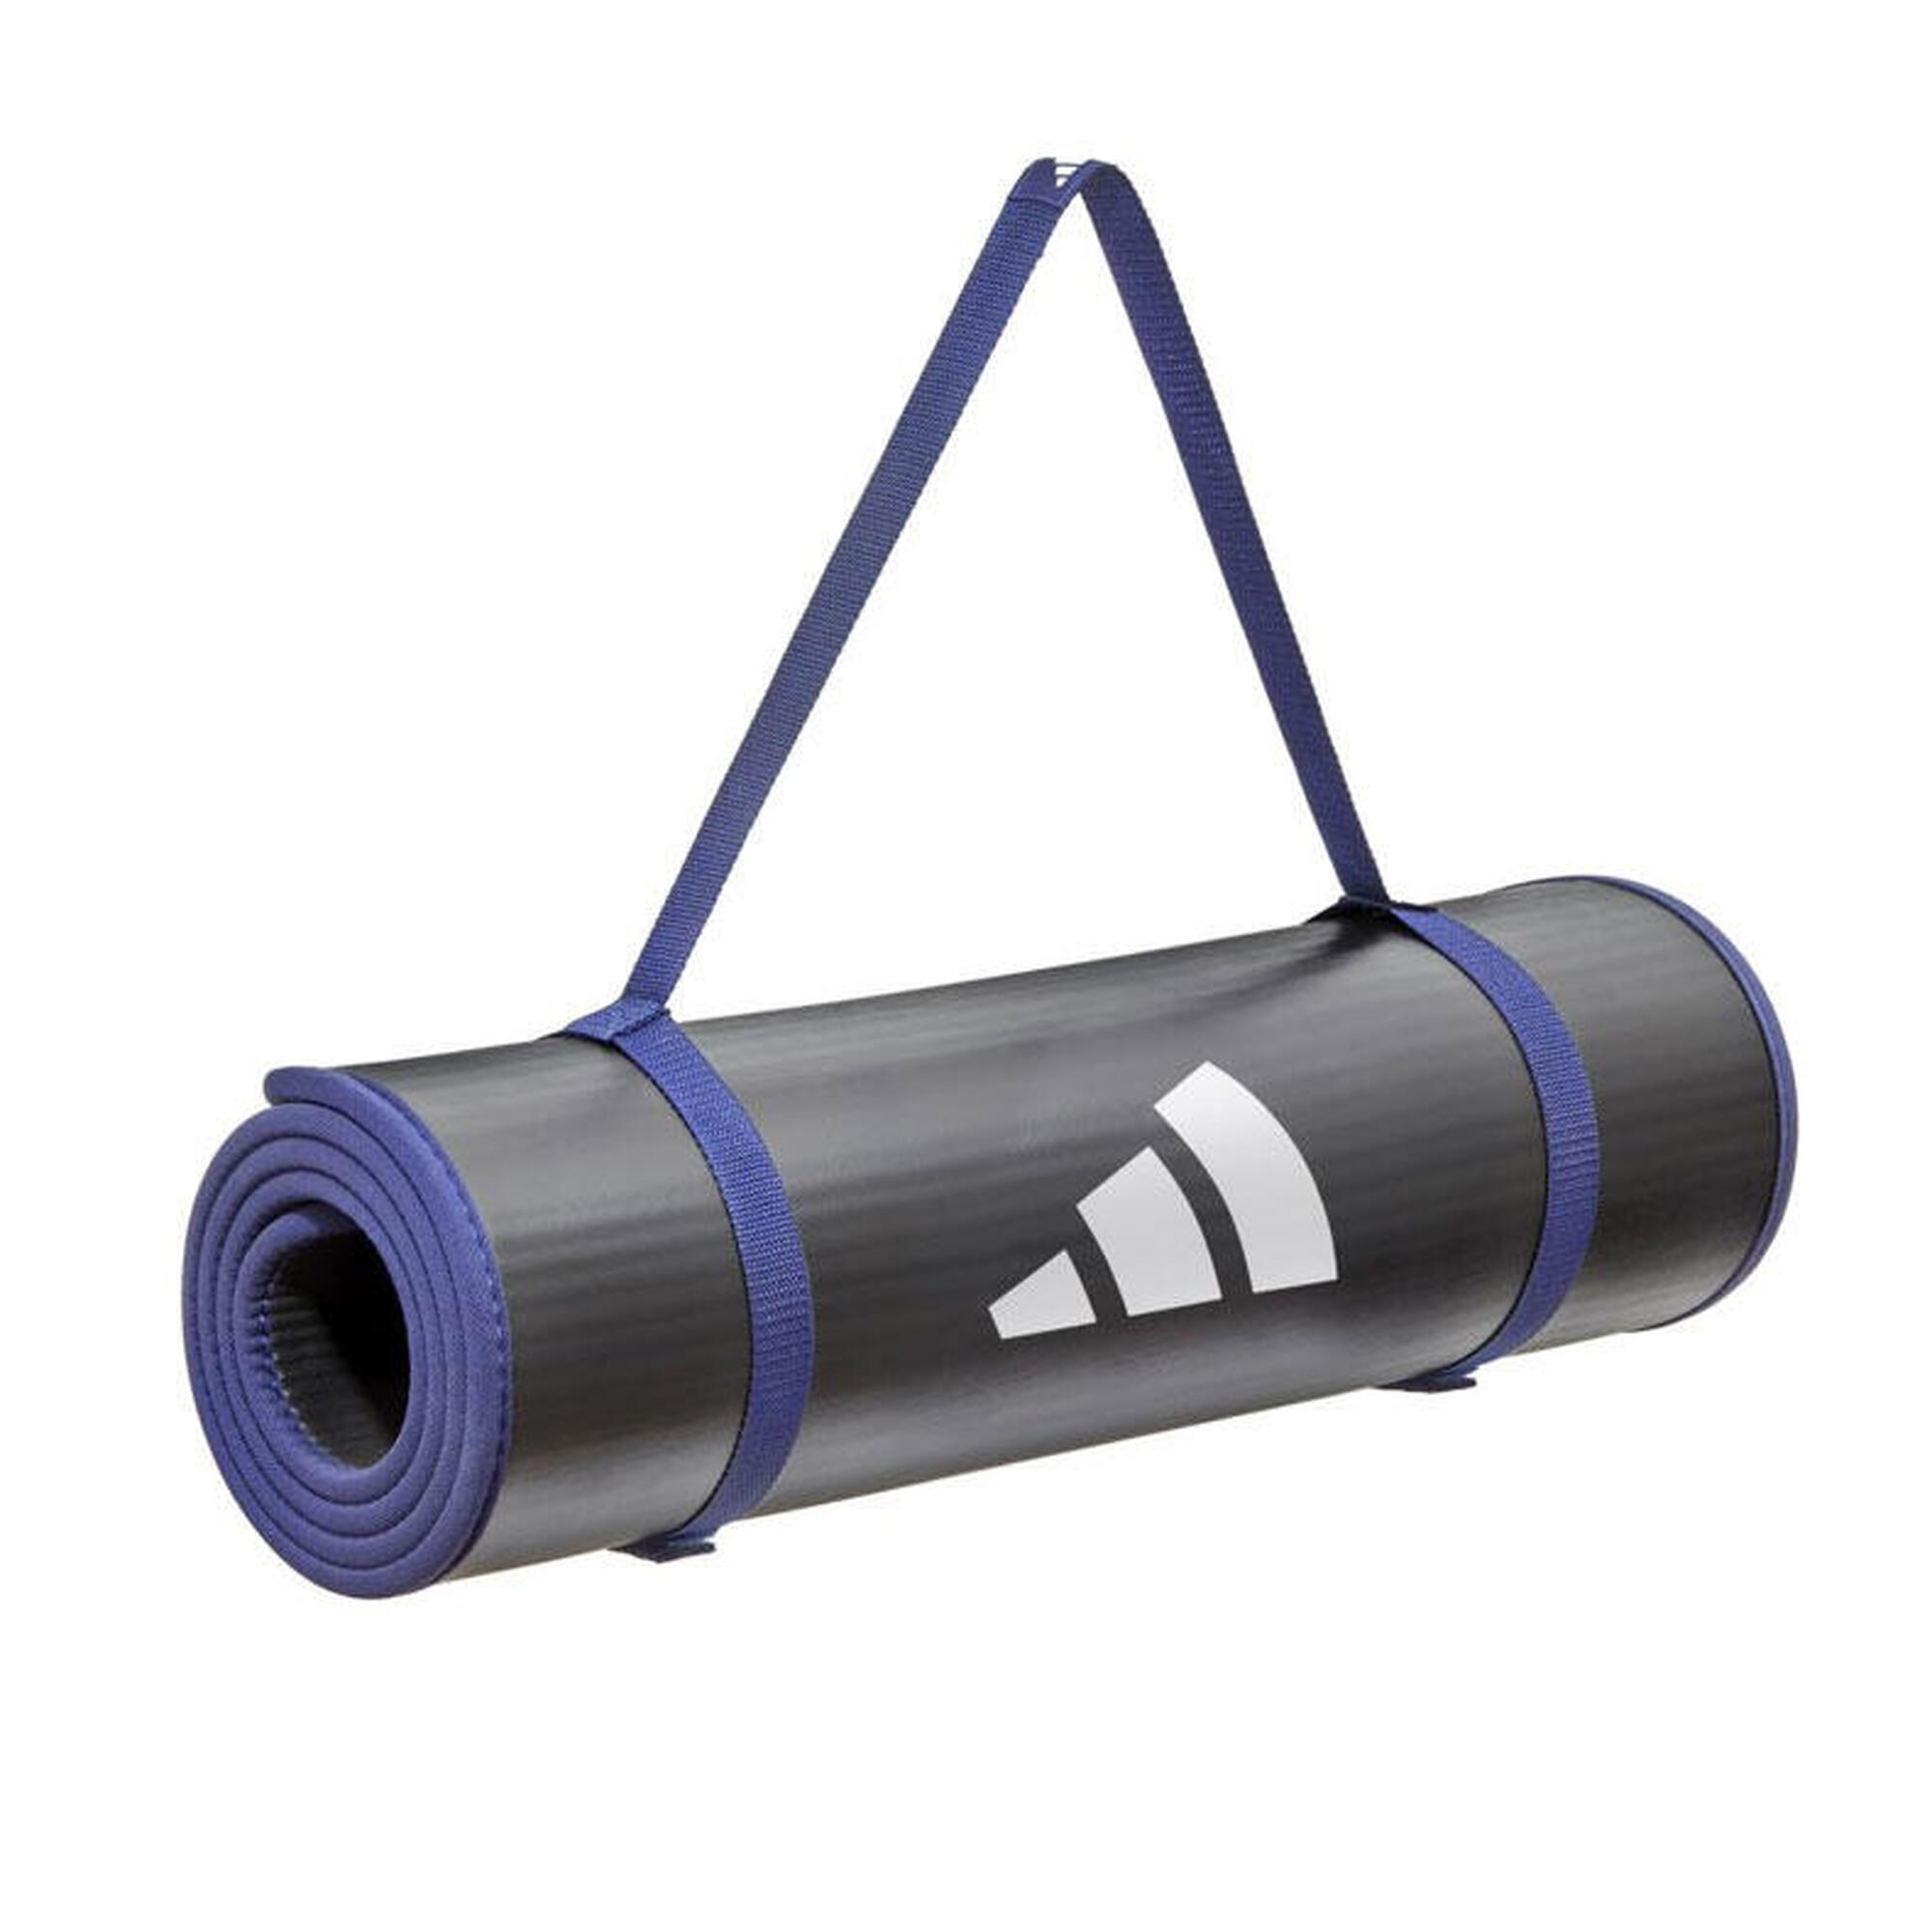 Tapete de Fitness Adidas - 10mm - Azul